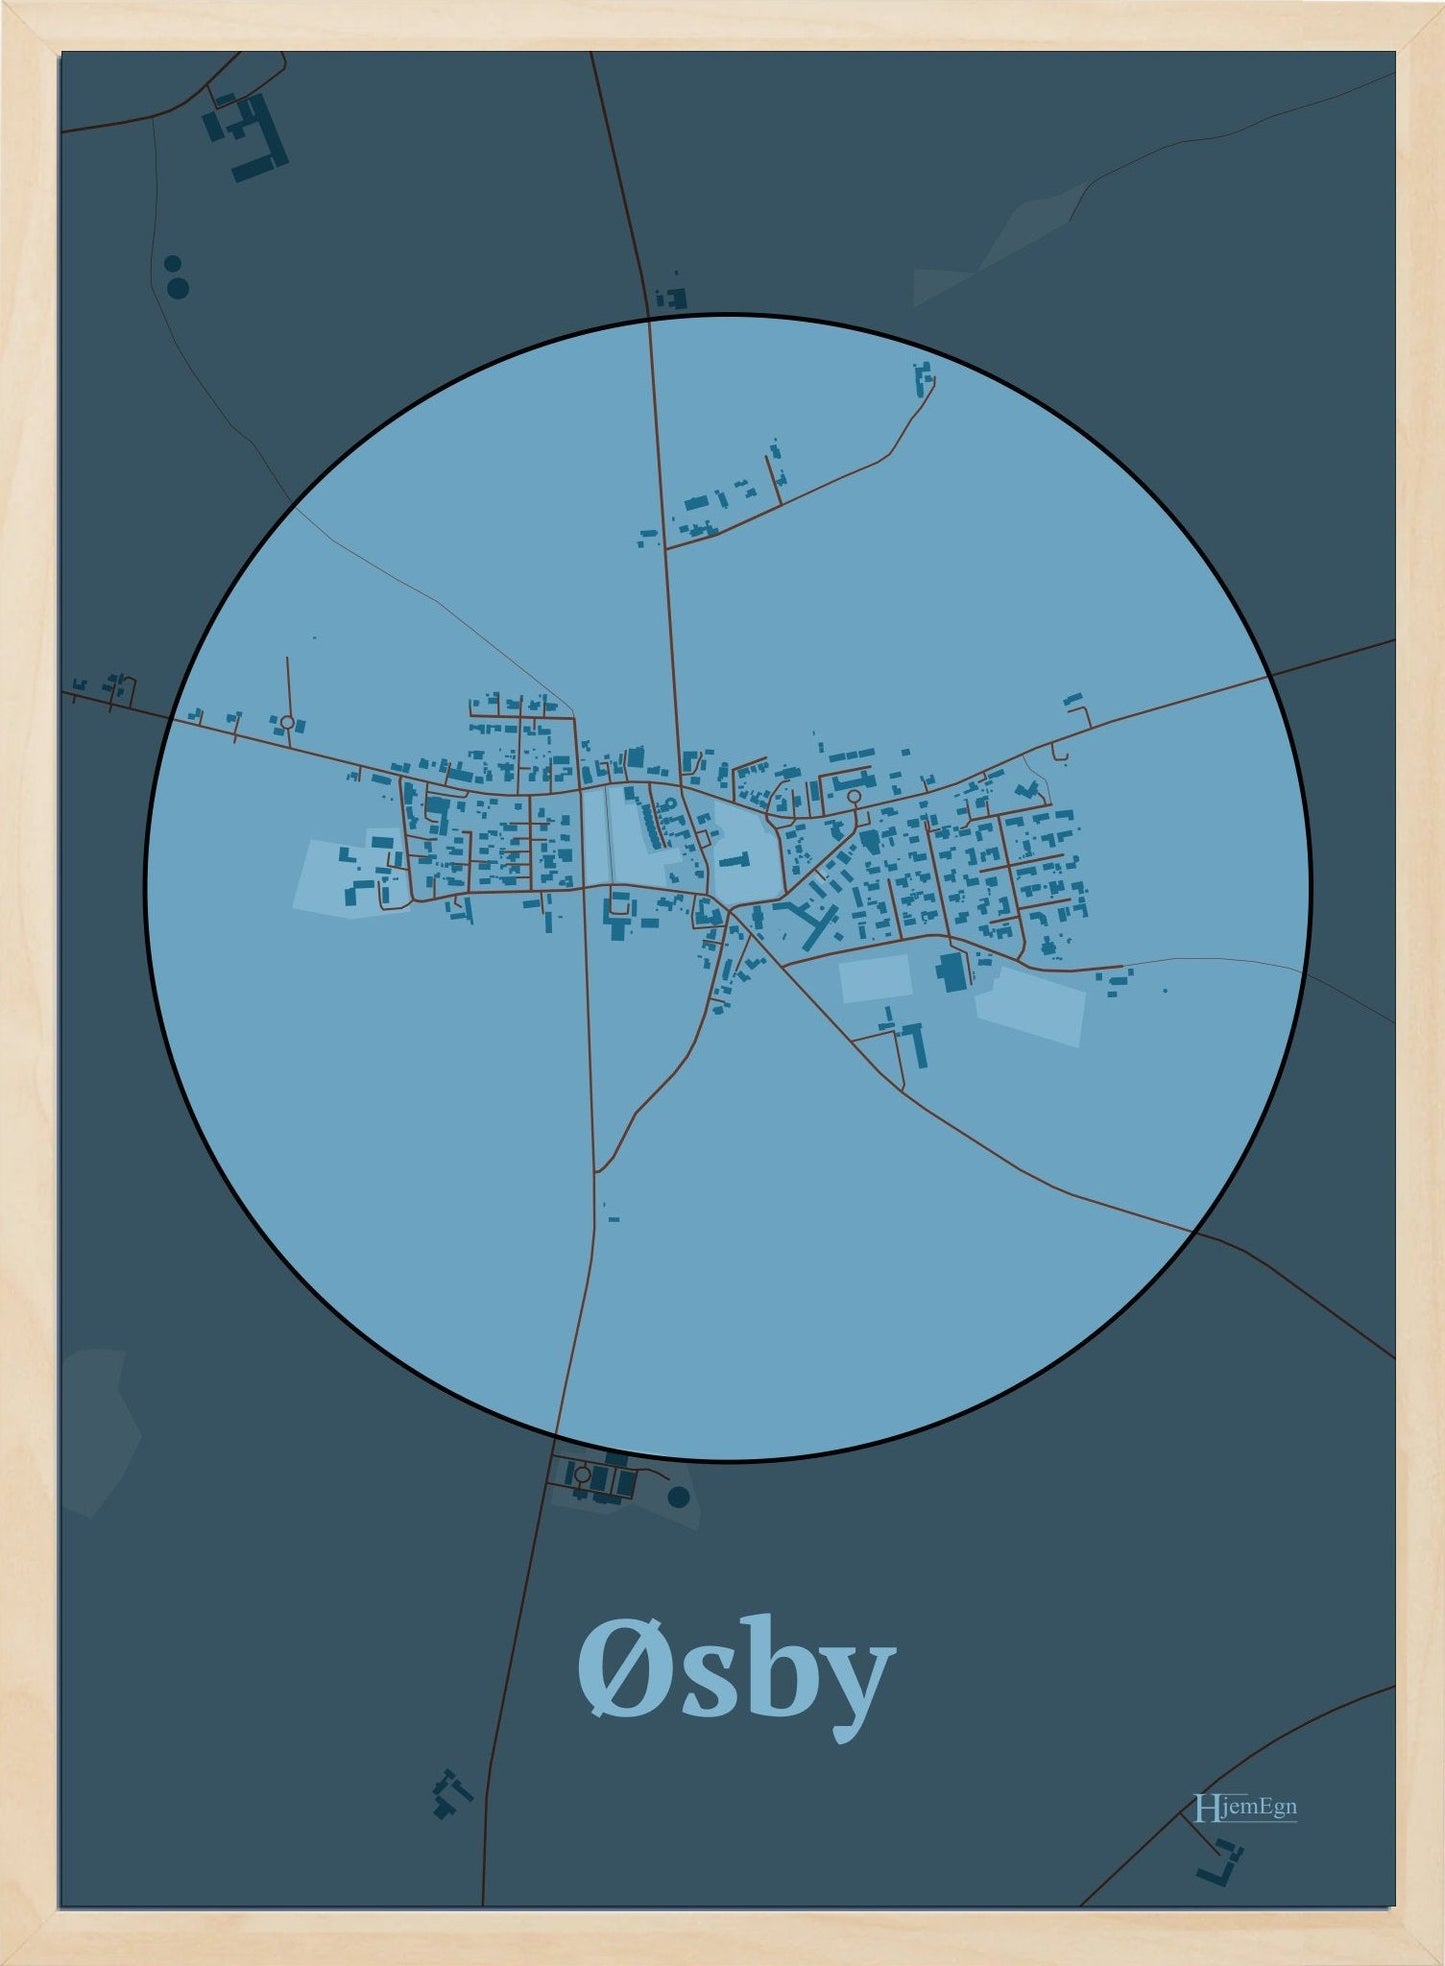 Øsby plakat i farve pastel blå og HjemEgn.dk design centrum. Design bykort for Øsby